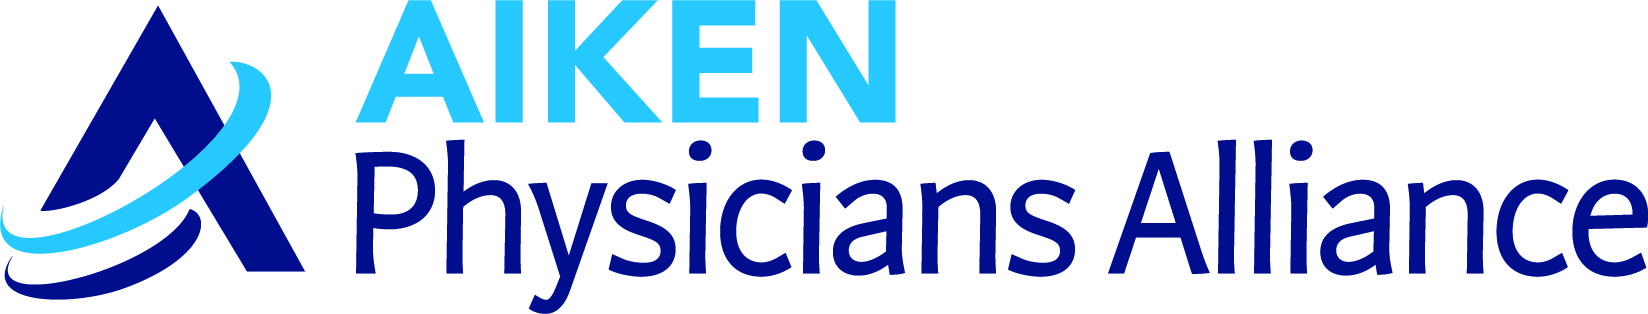 Aiken Physicians Alliance - Orthopedics and Pediatrics